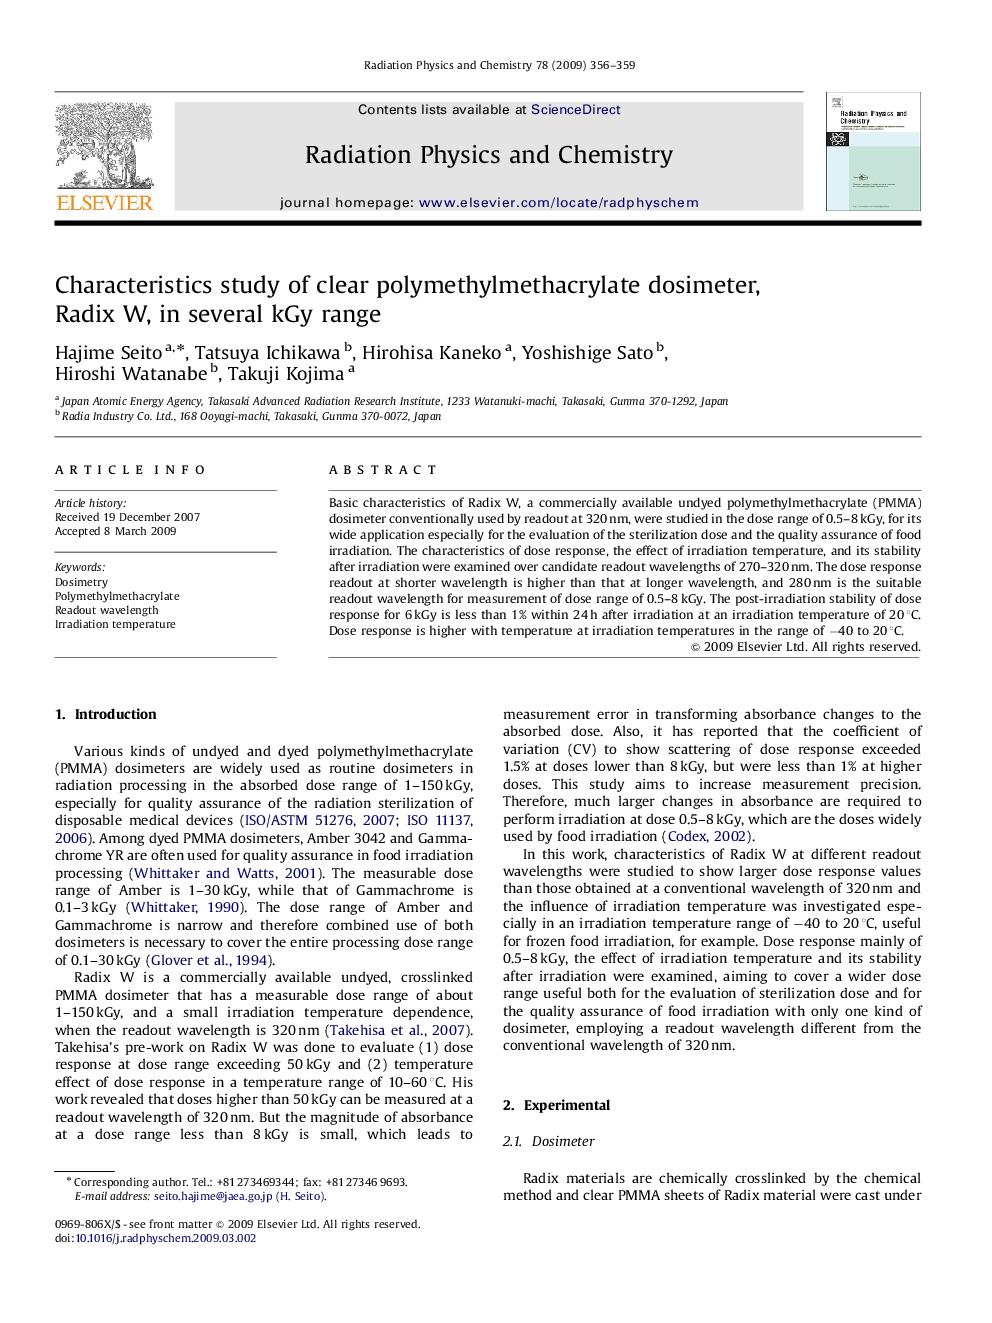 Characteristics study of clear polymethylmethacrylate dosimeter, Radix W, in several kGy range